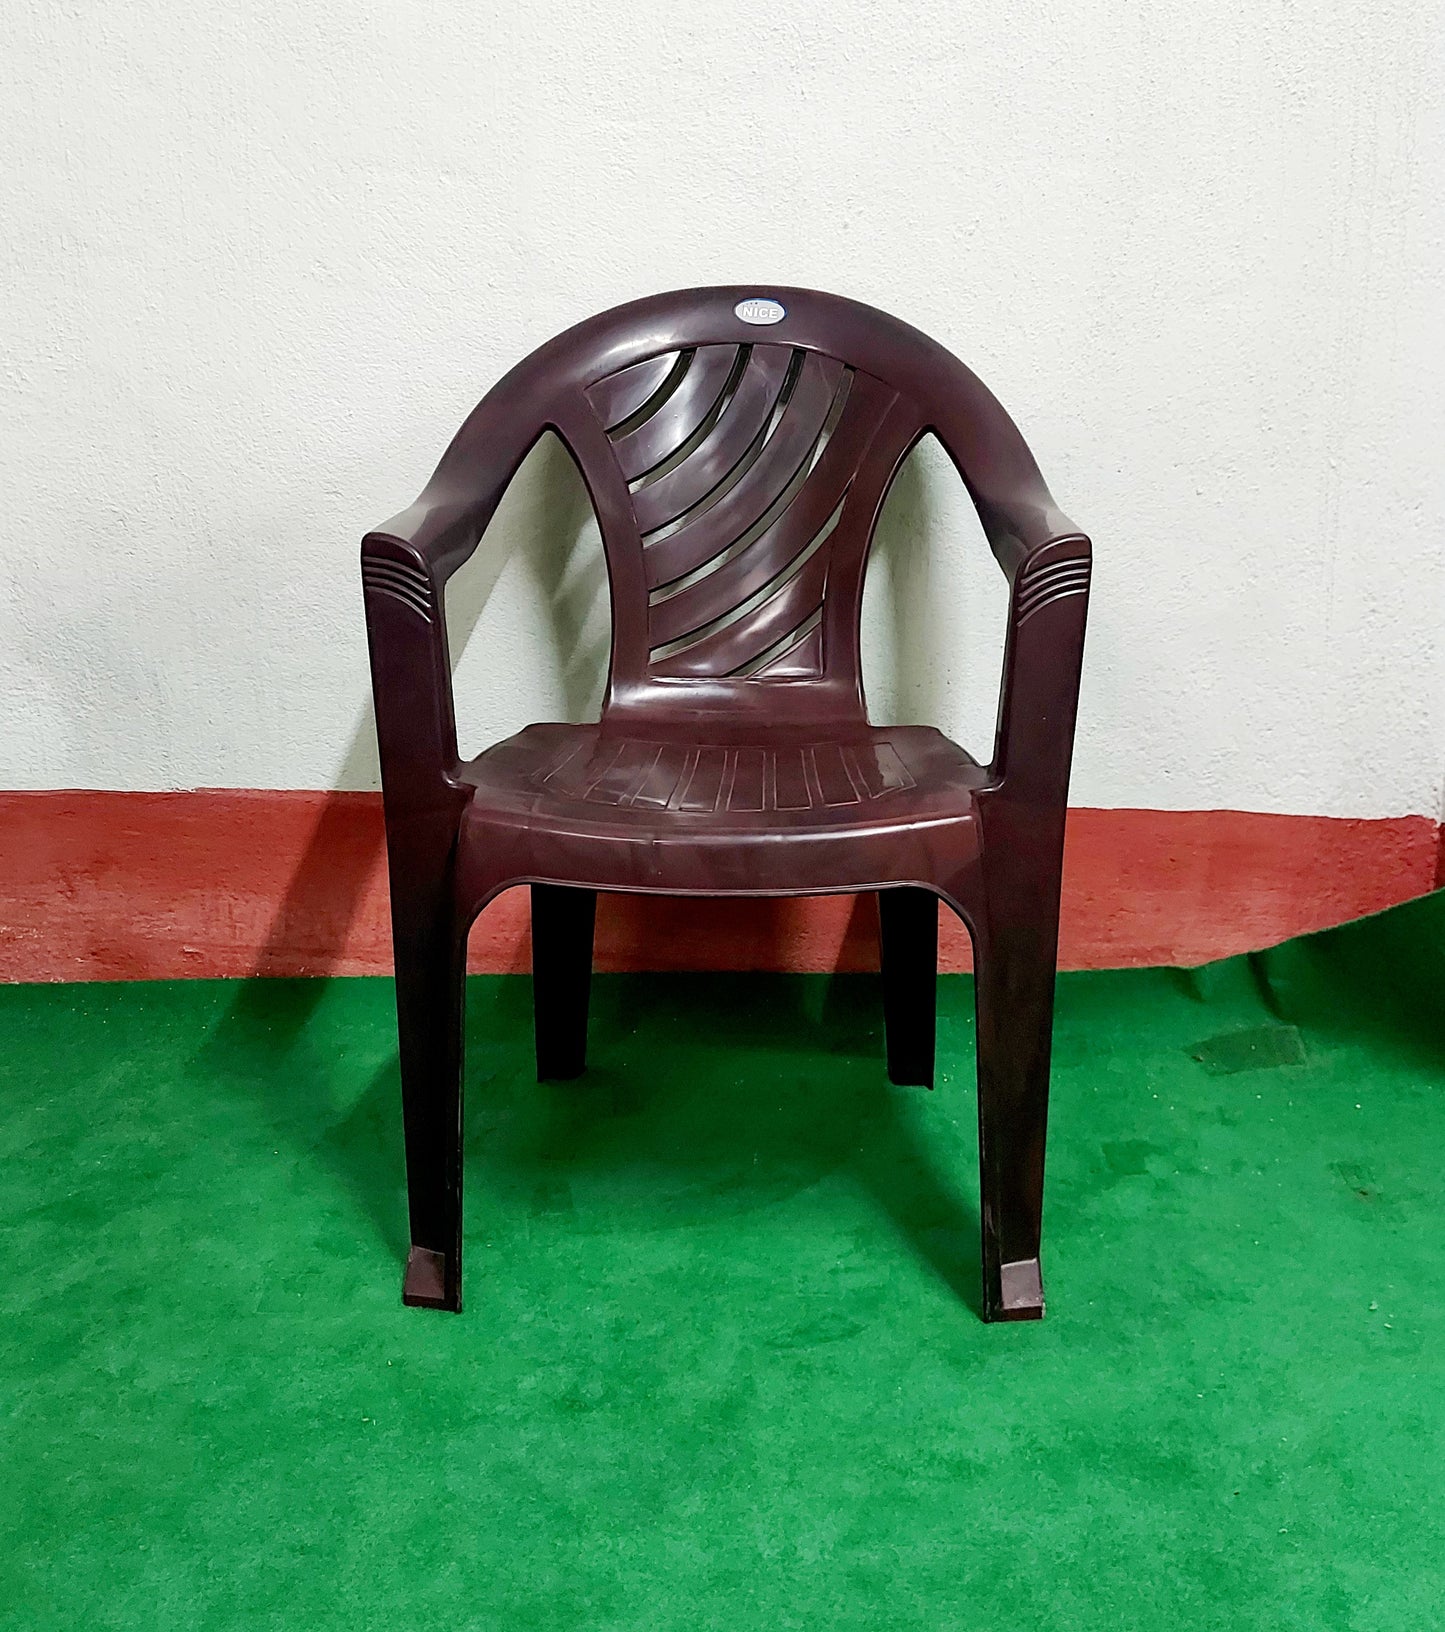 Bowzar Decor Plastic Chair With Handle Dark Brown